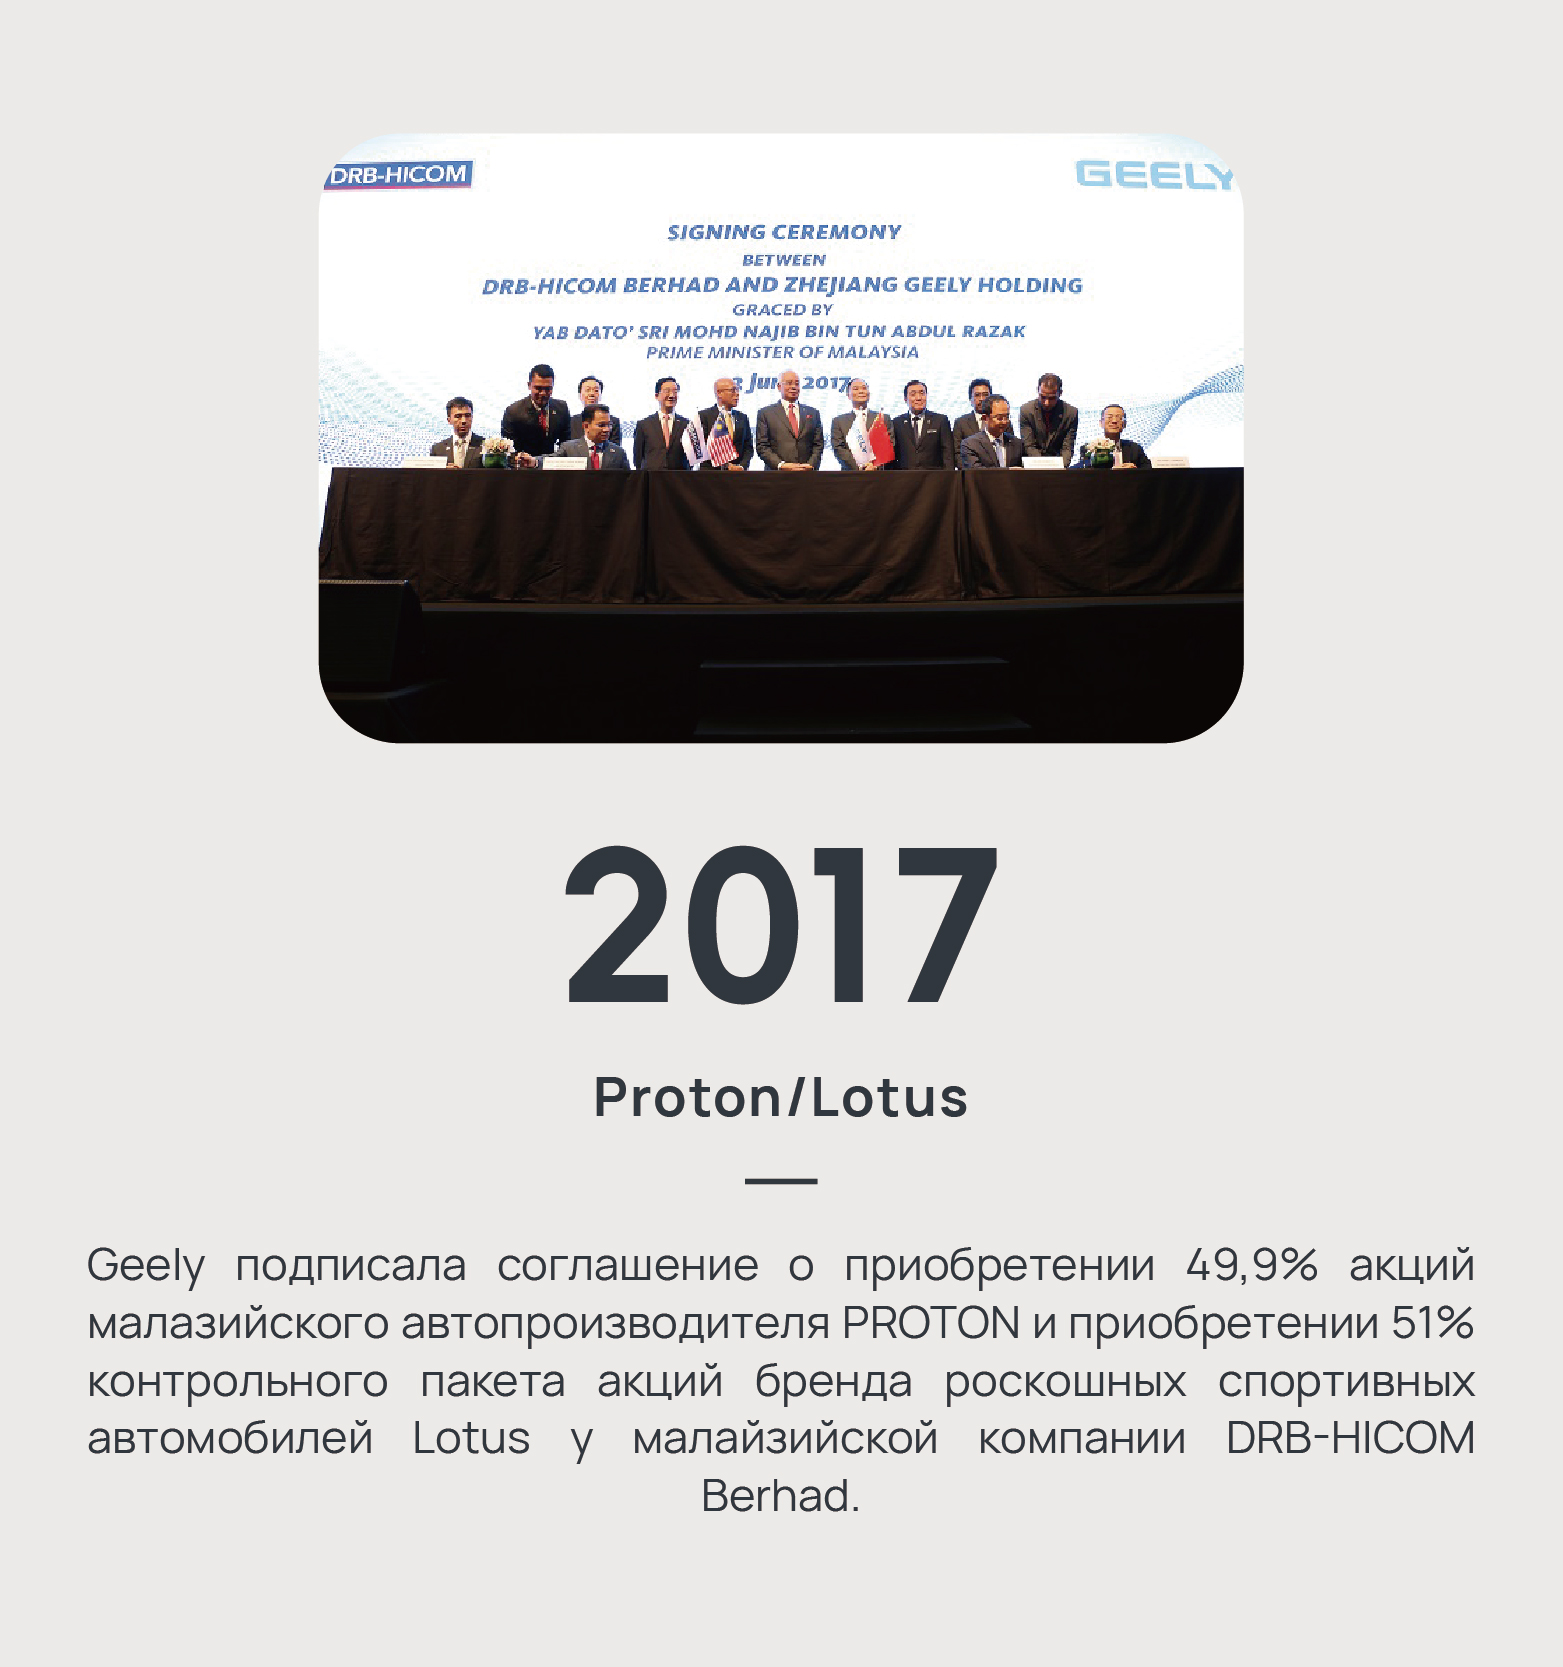 2017 - Proton/Lotus